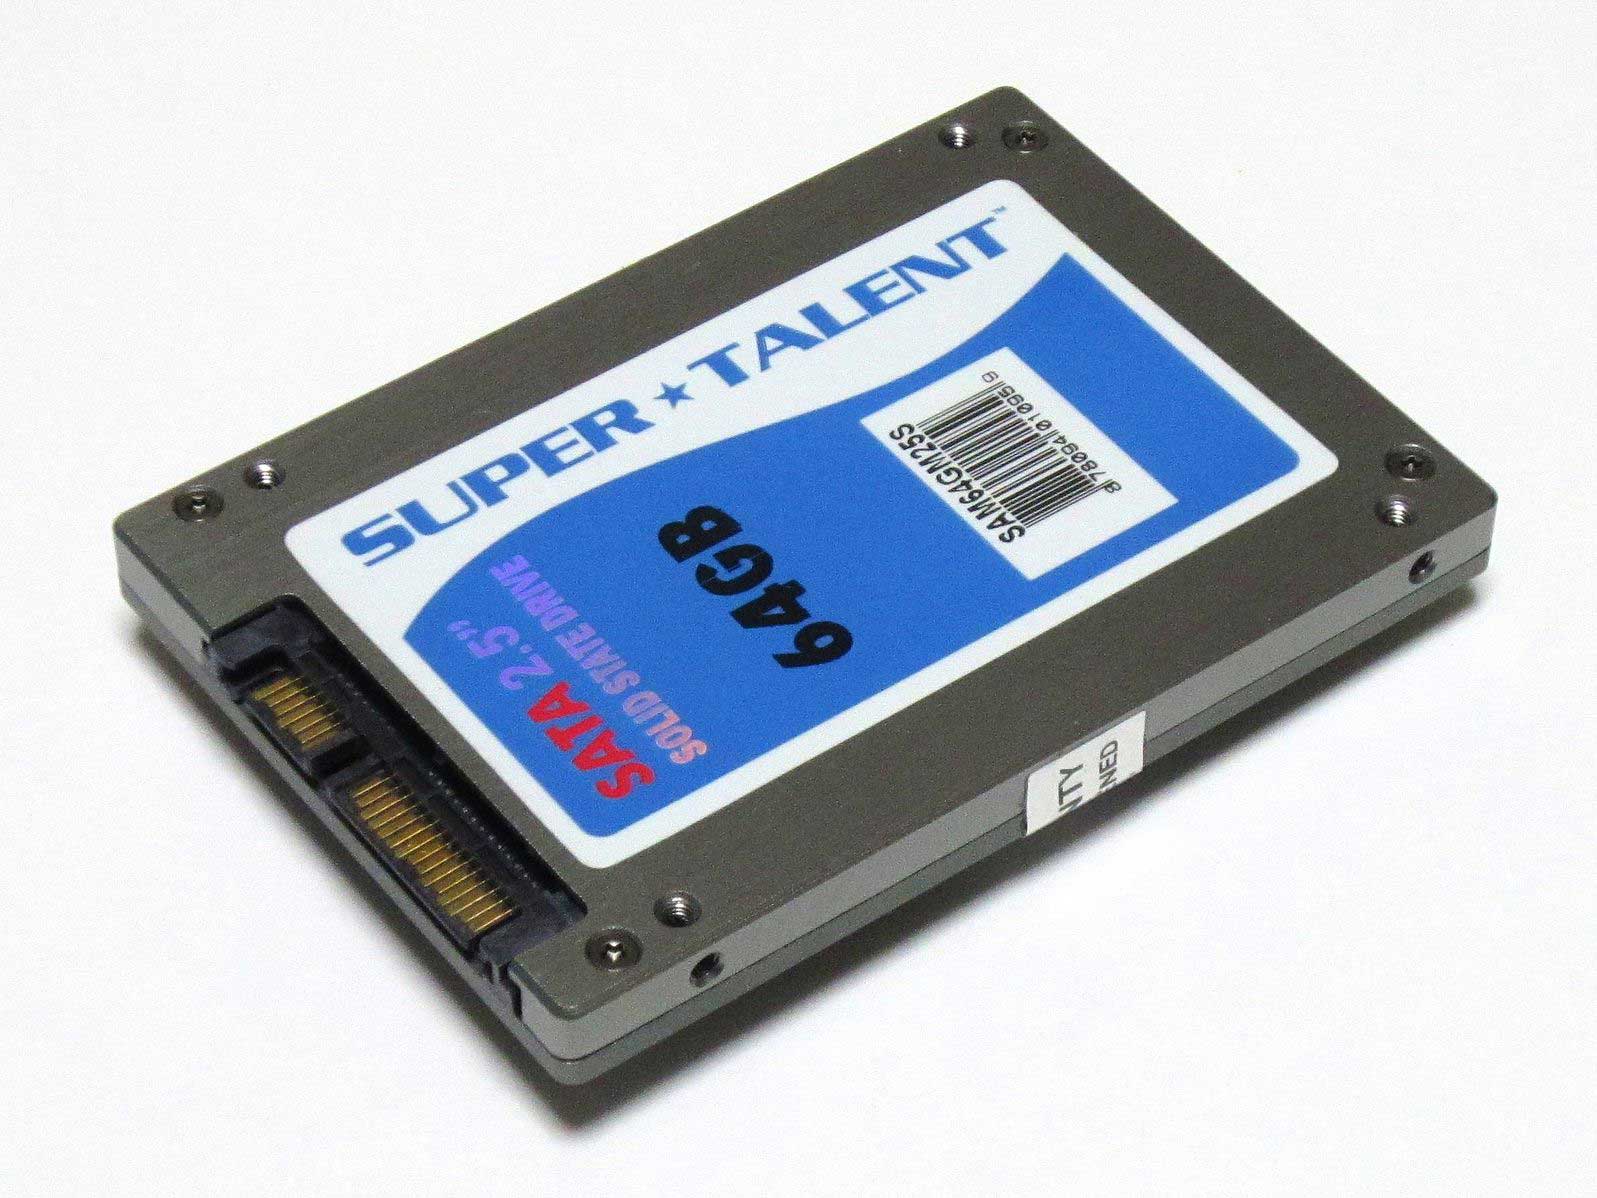 A 2.5-inch SSD